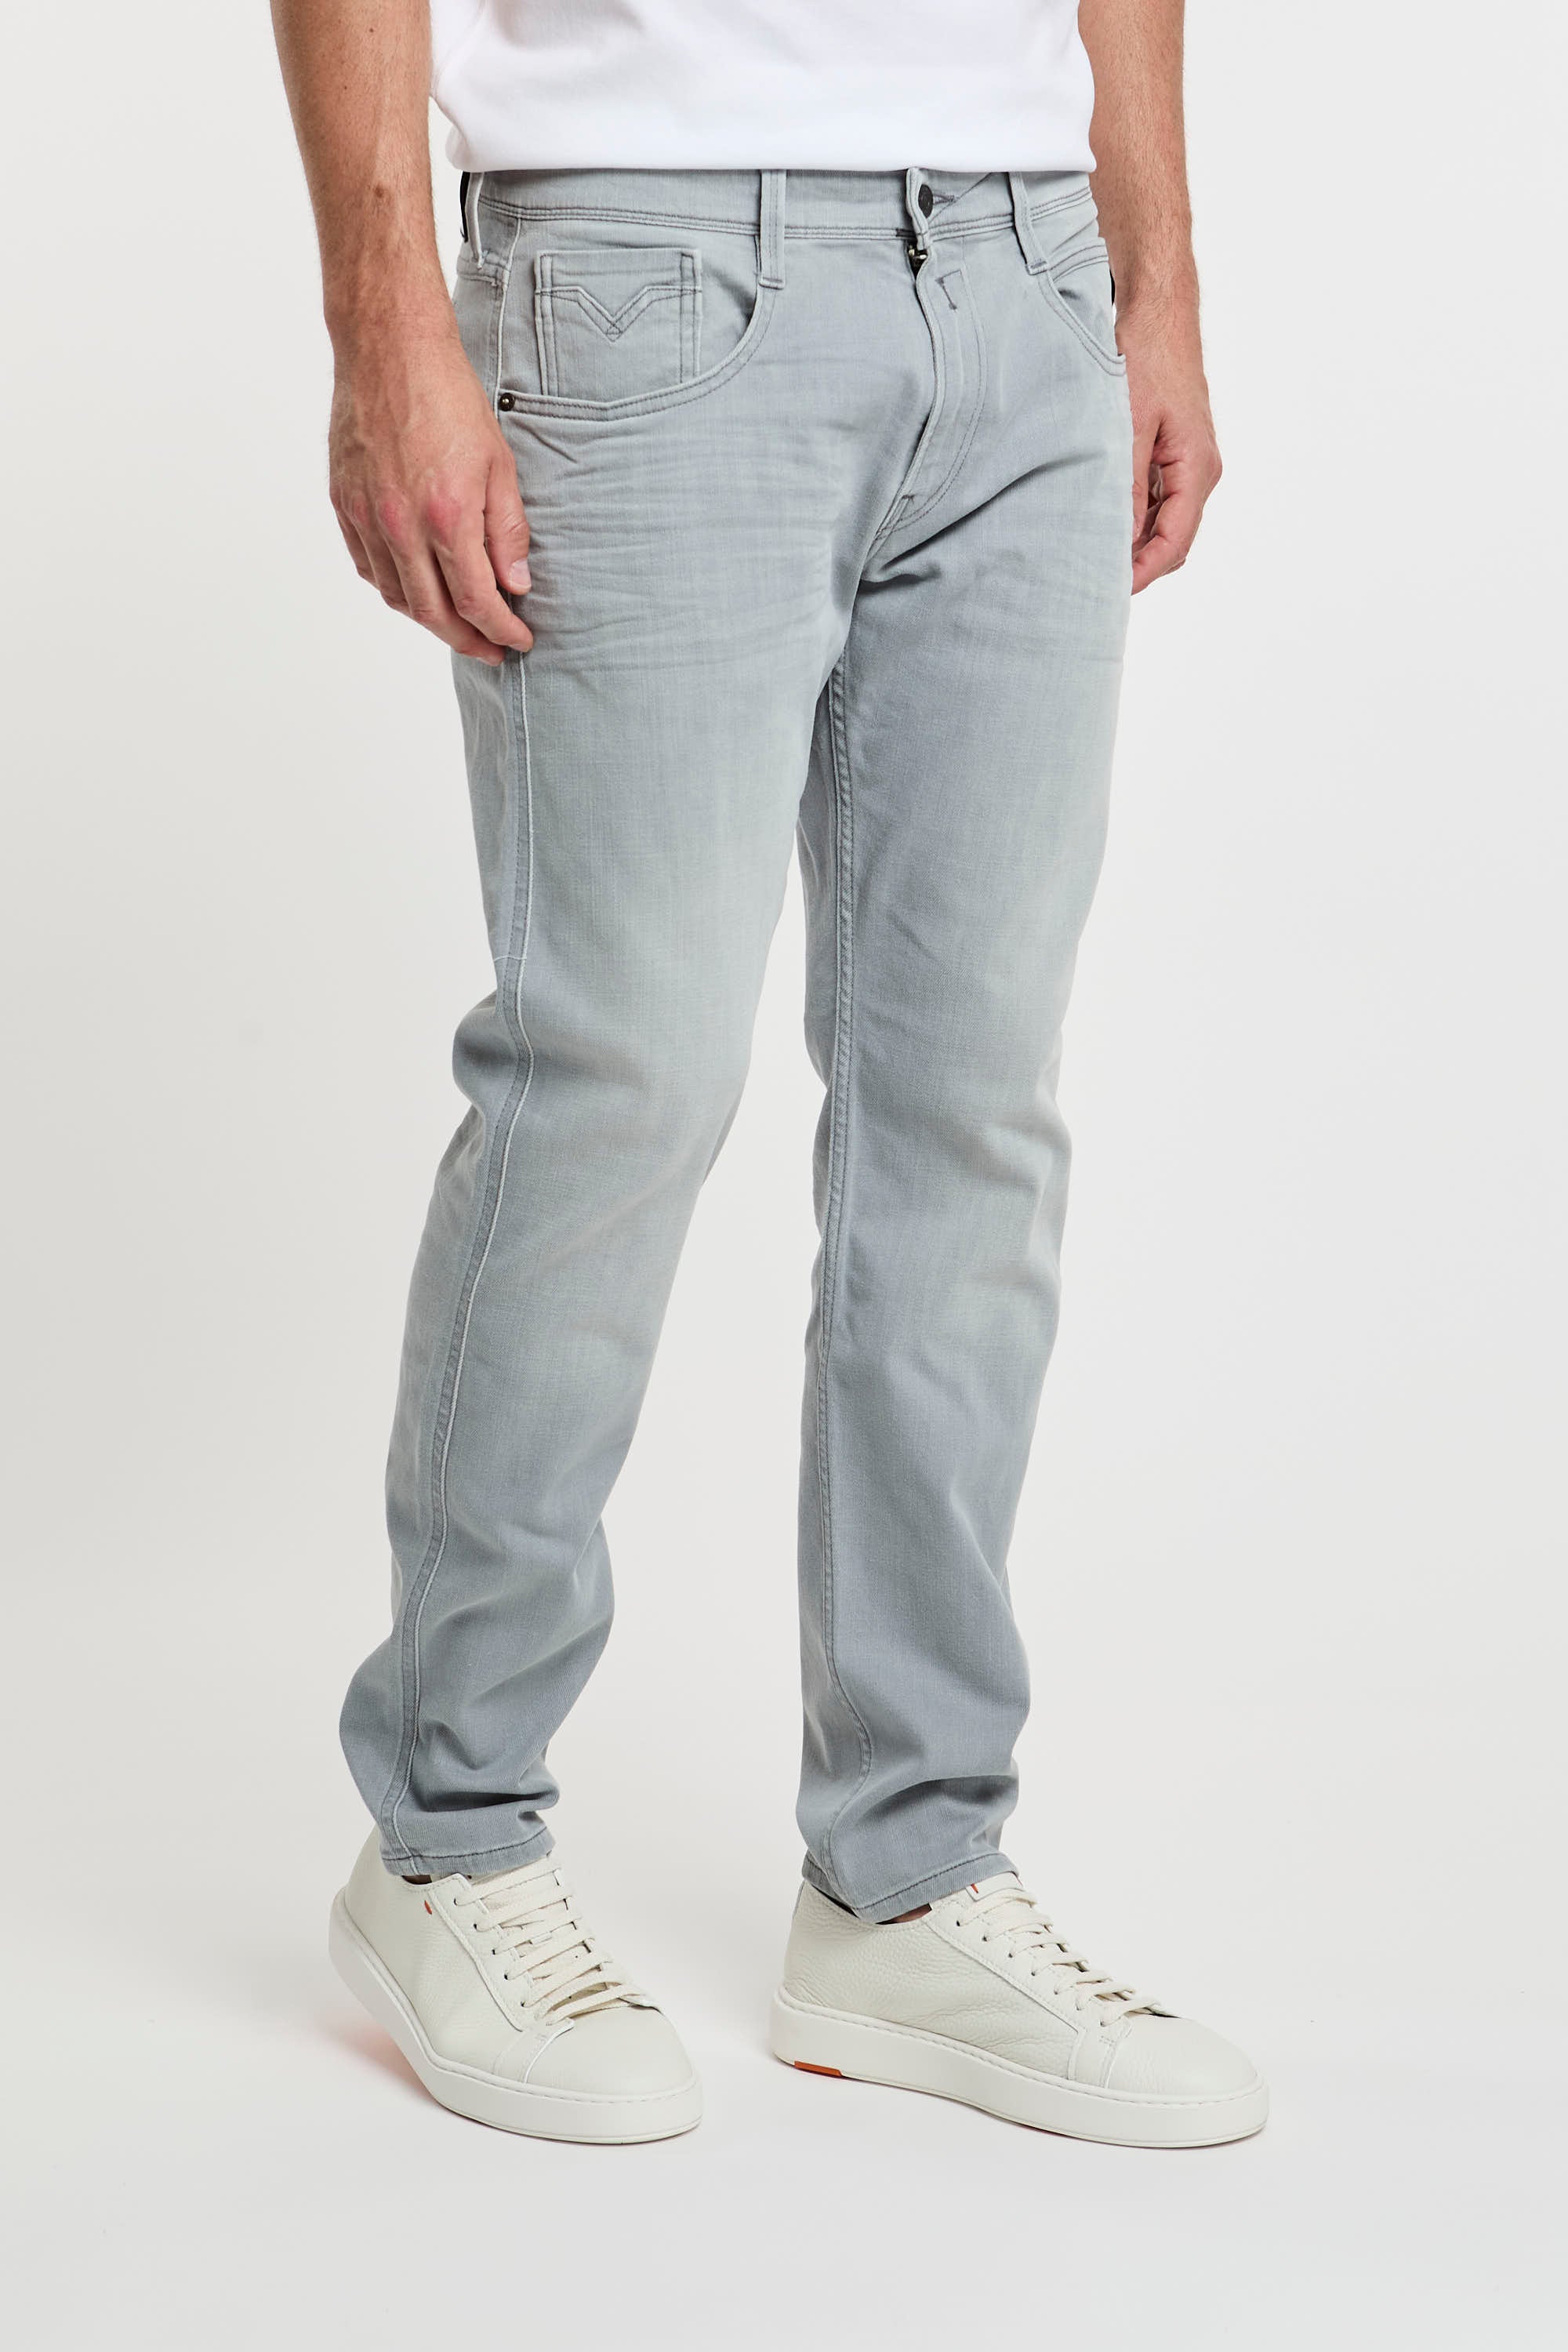 Replay Jeans Slim Fit Anbass aus Baumwolle/Elasthan in Hellgrau-3